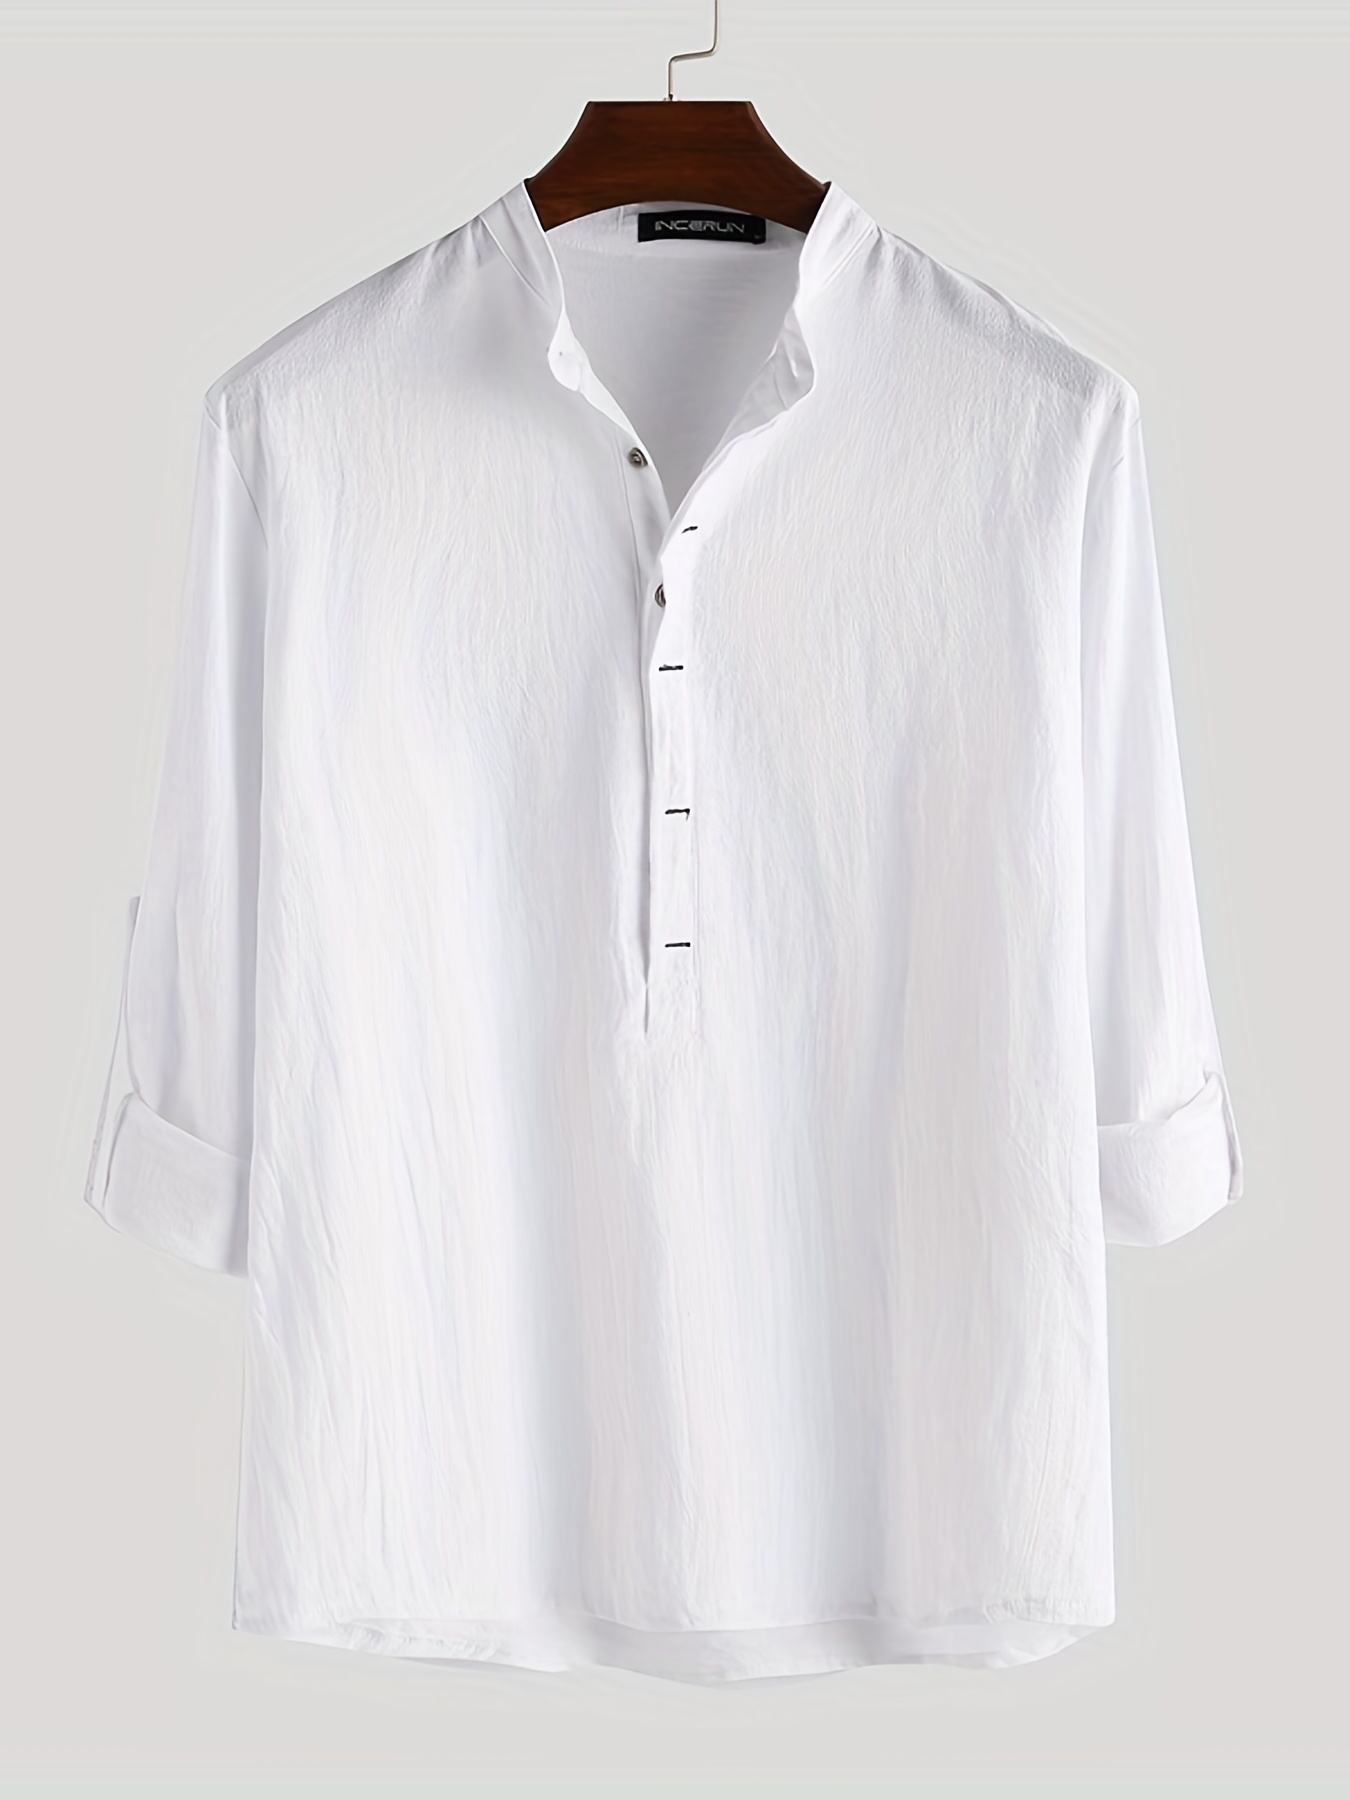 Classic Men's Long Sleeve Shirt with Mandarin Collar, Black Colou